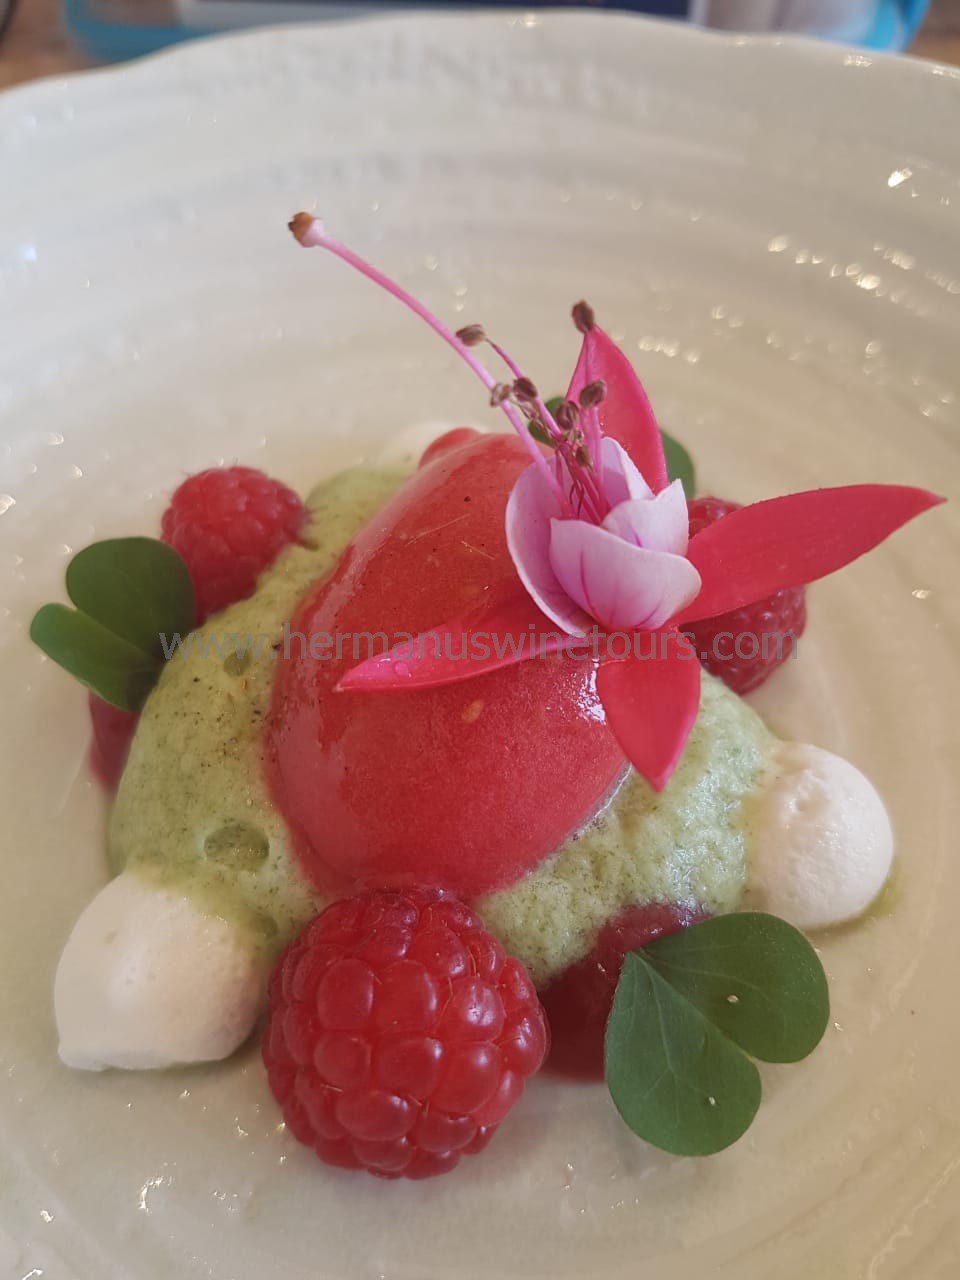 Raspberry and mint sorbet, Hermanus restaurant, South Africa